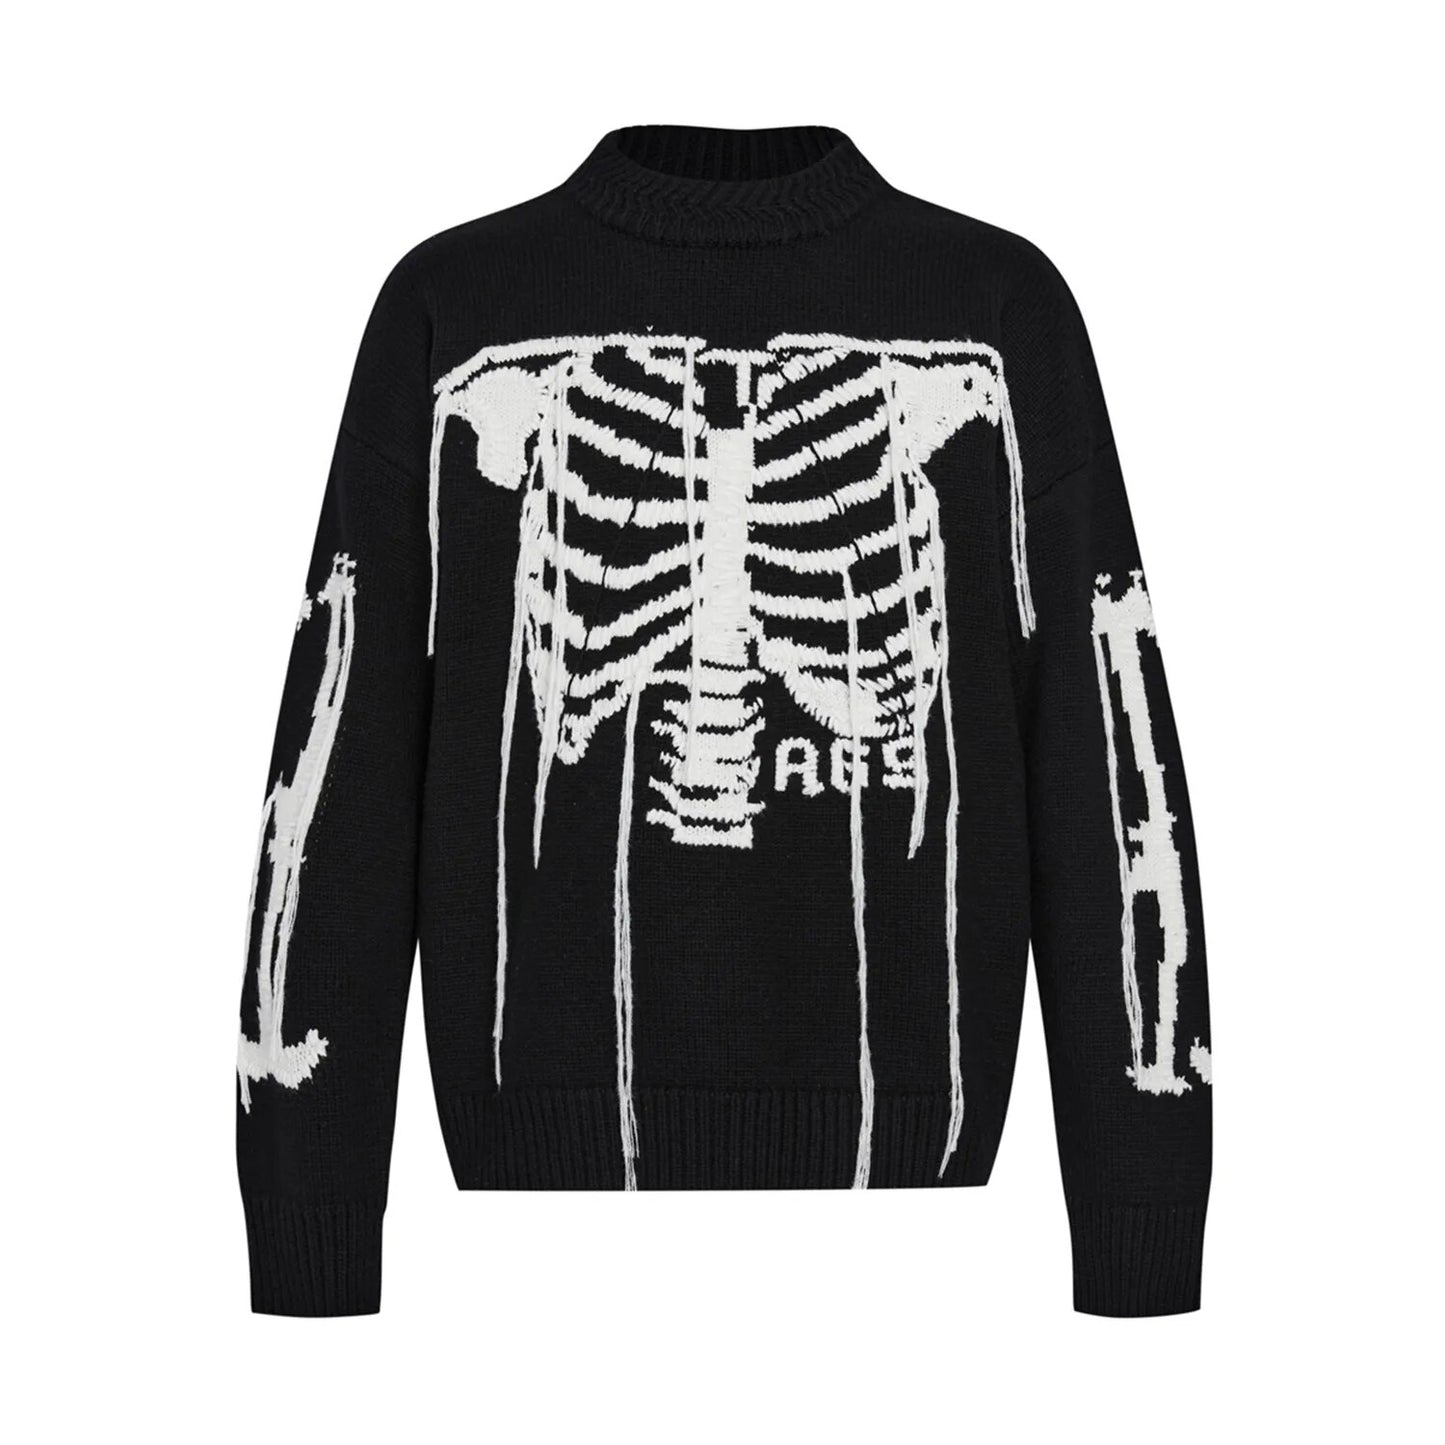 R69 Skeleton Pattern Knitted Sweater